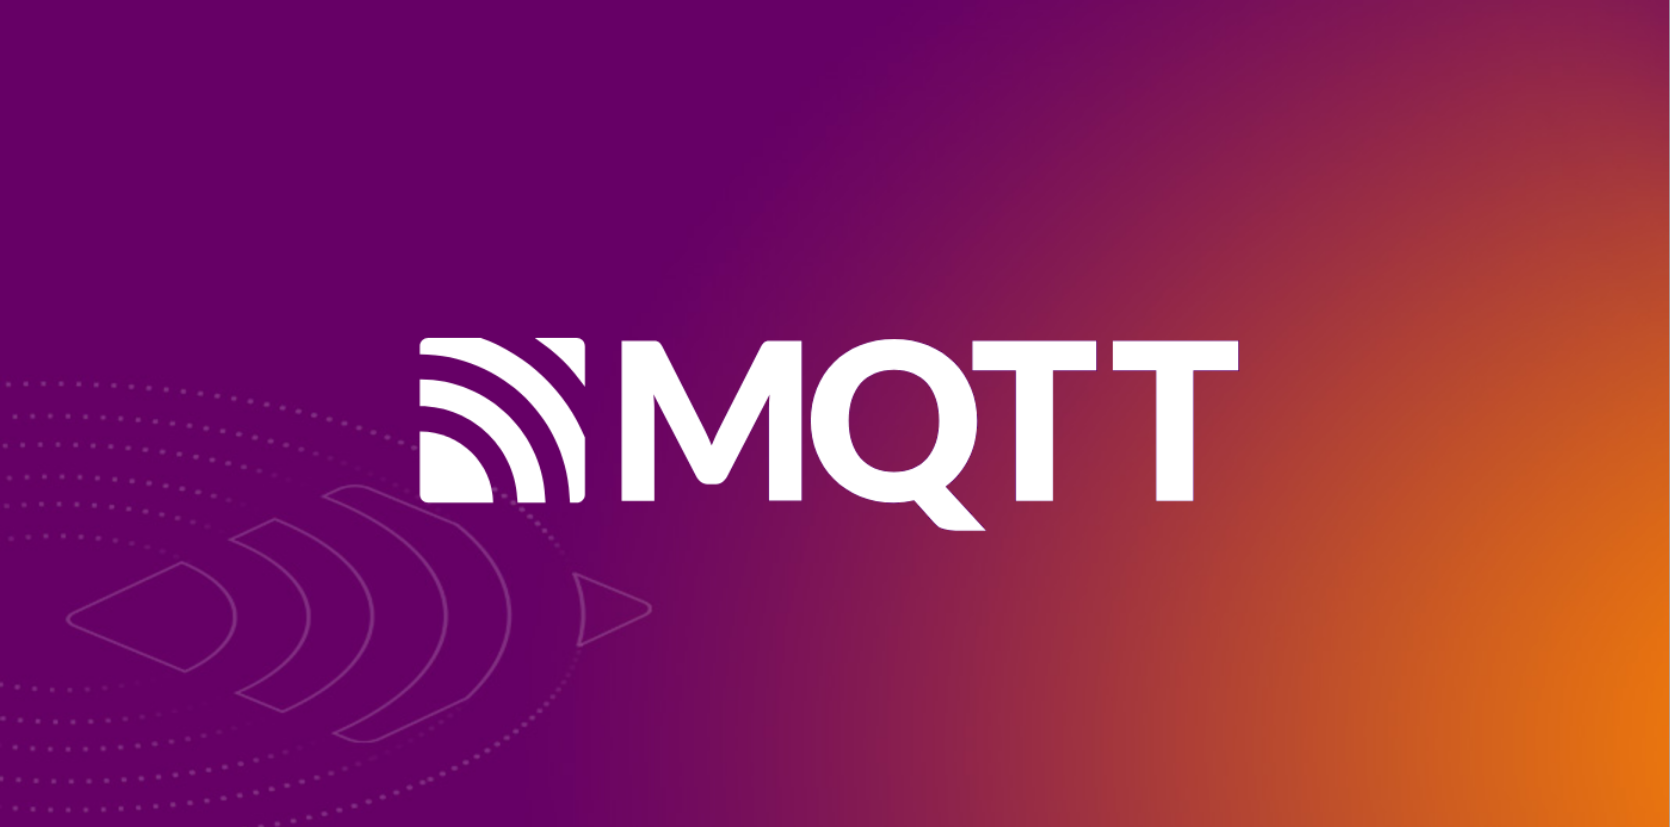 MQTTX 1.9.7 更新：MQTTX AI Copilot 发布